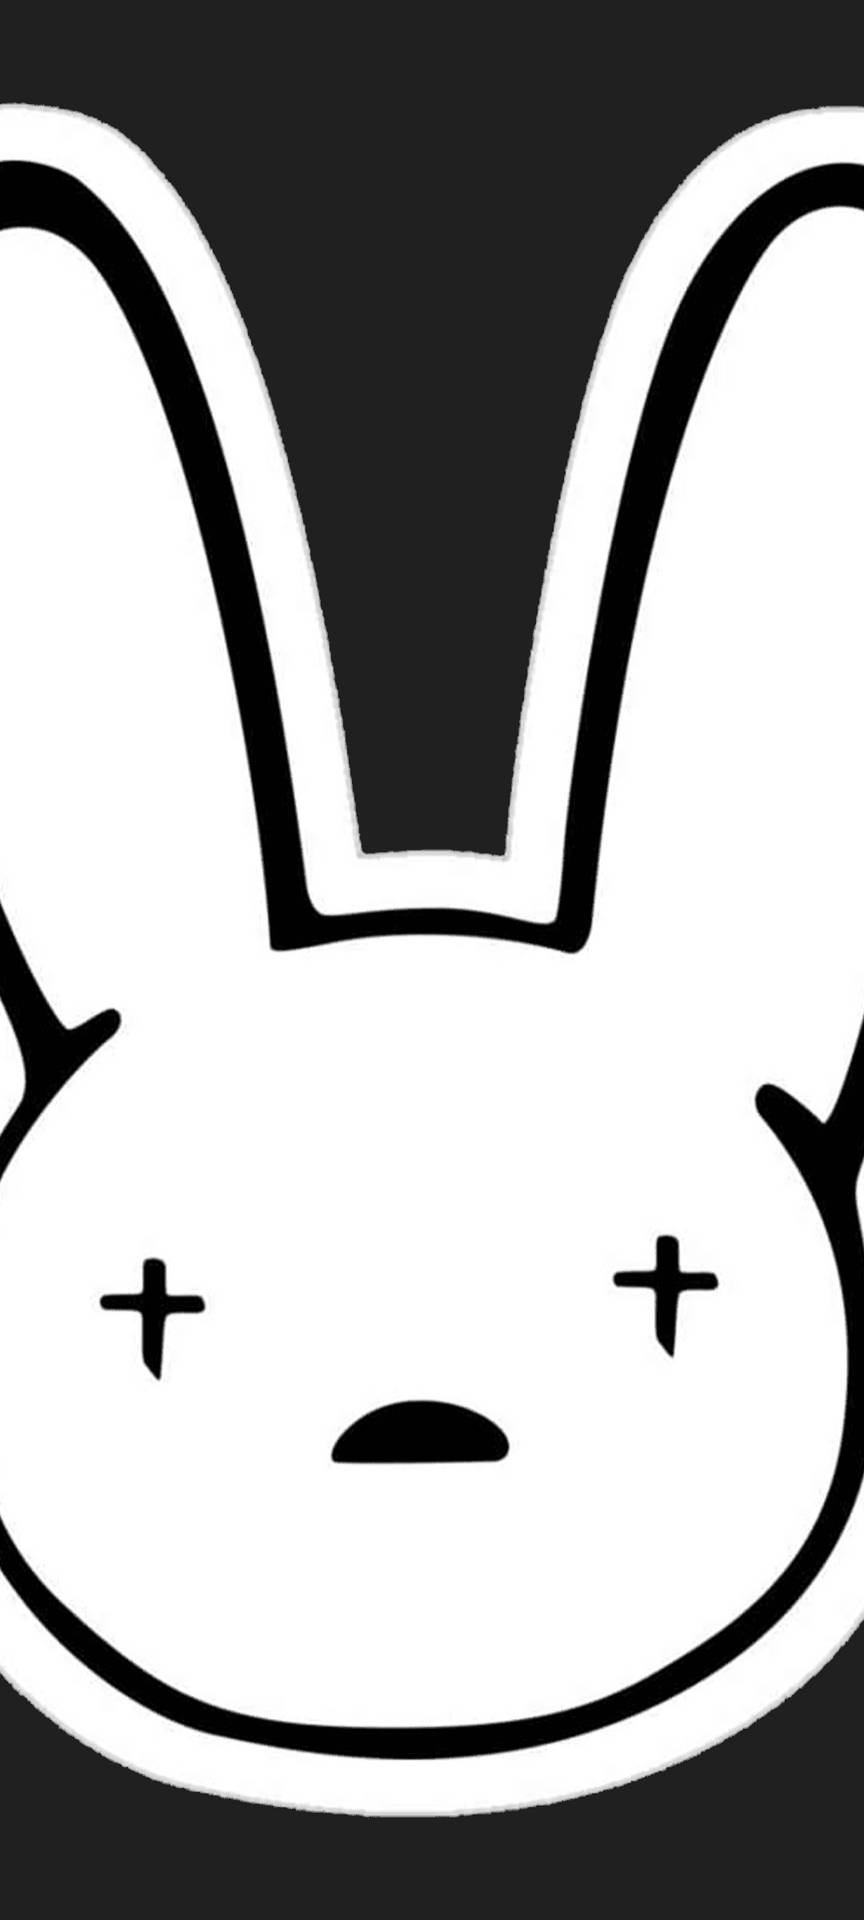 Black And White Bad Bunny Logo Background